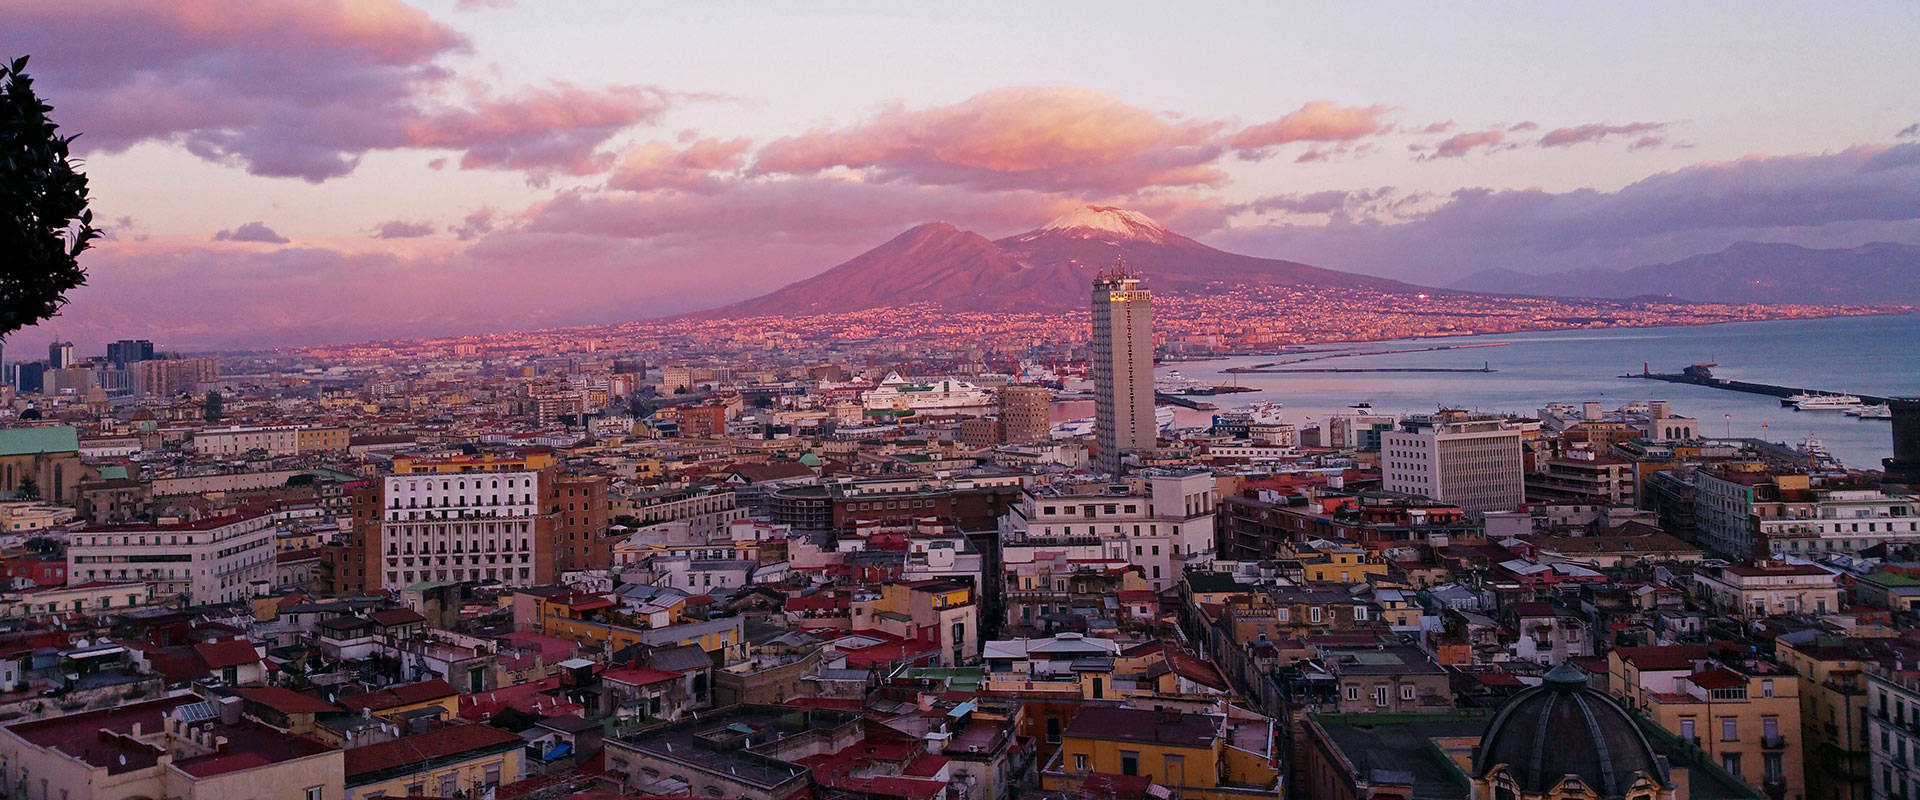 Naples City Panoramic Photograph